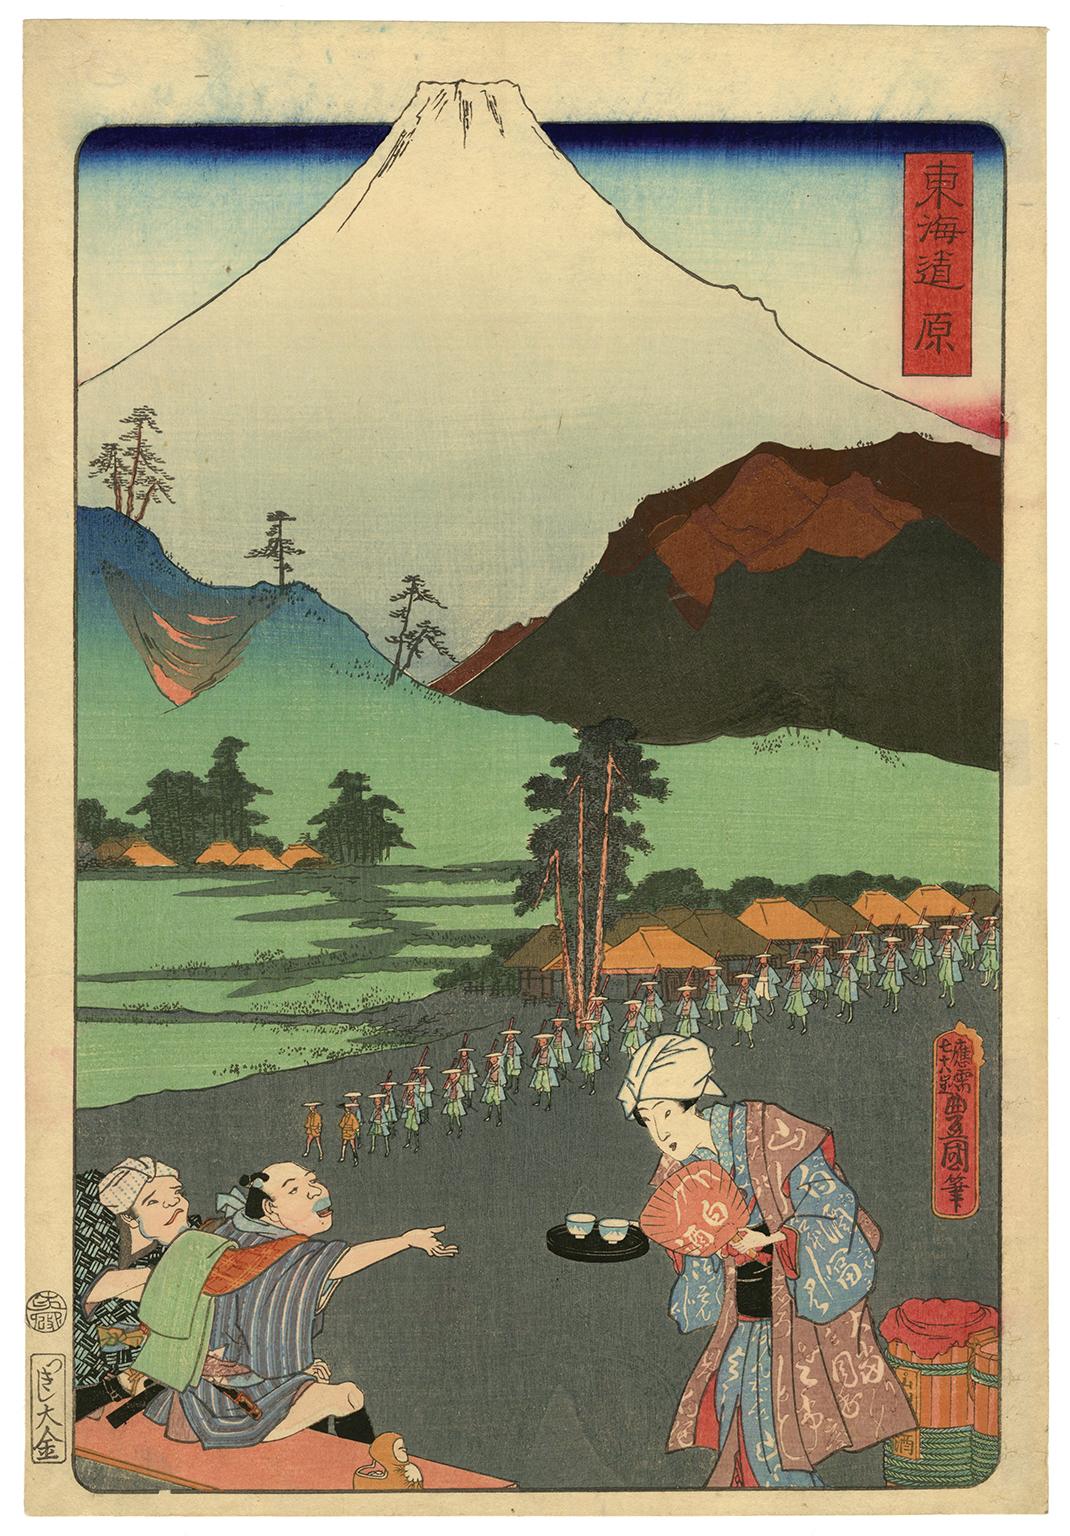 'Tokaido' — Mt. Fuji Rising – Mid-Nineteenth Century Woodblock Print